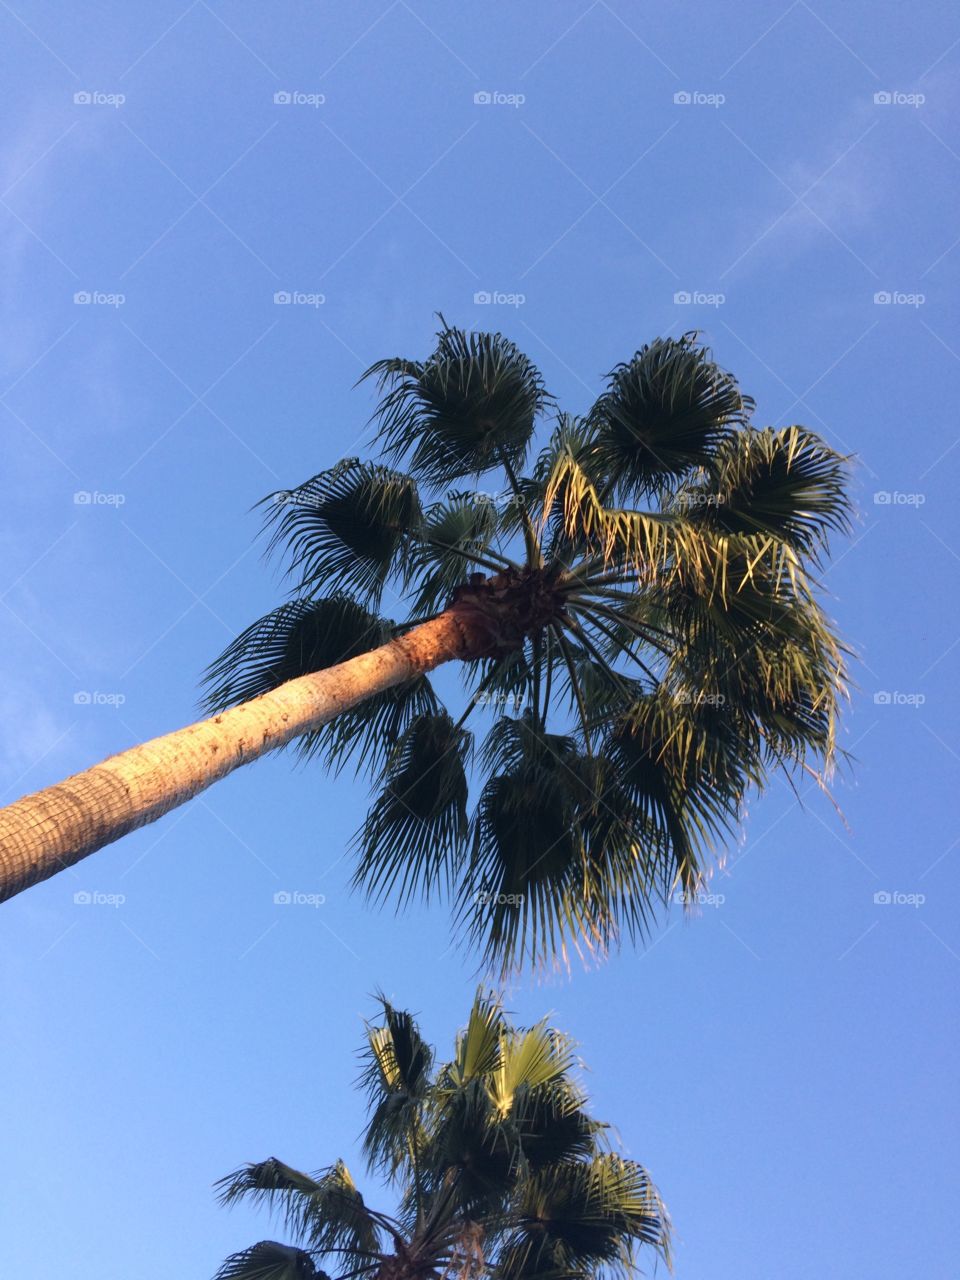 Palm tree in California.